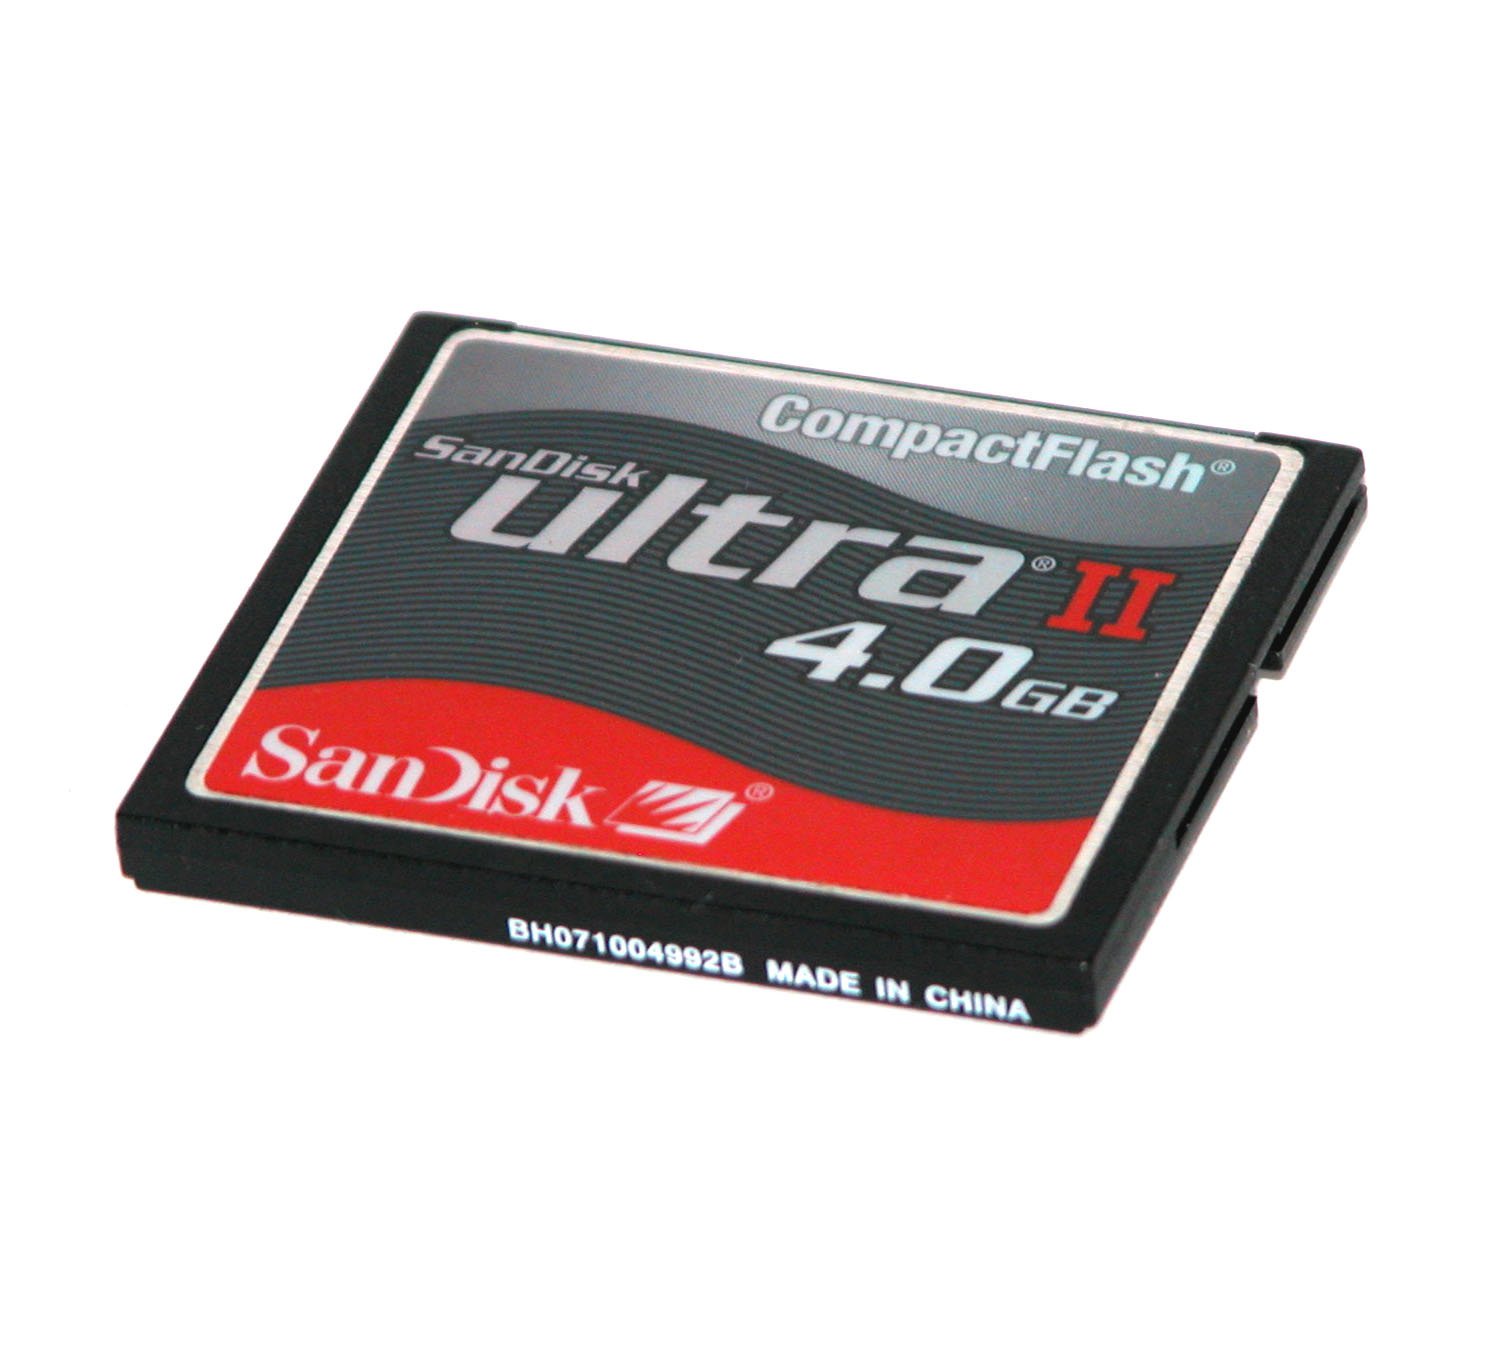 SanDisk Ultra II 4GB CompactFlash Card #4992